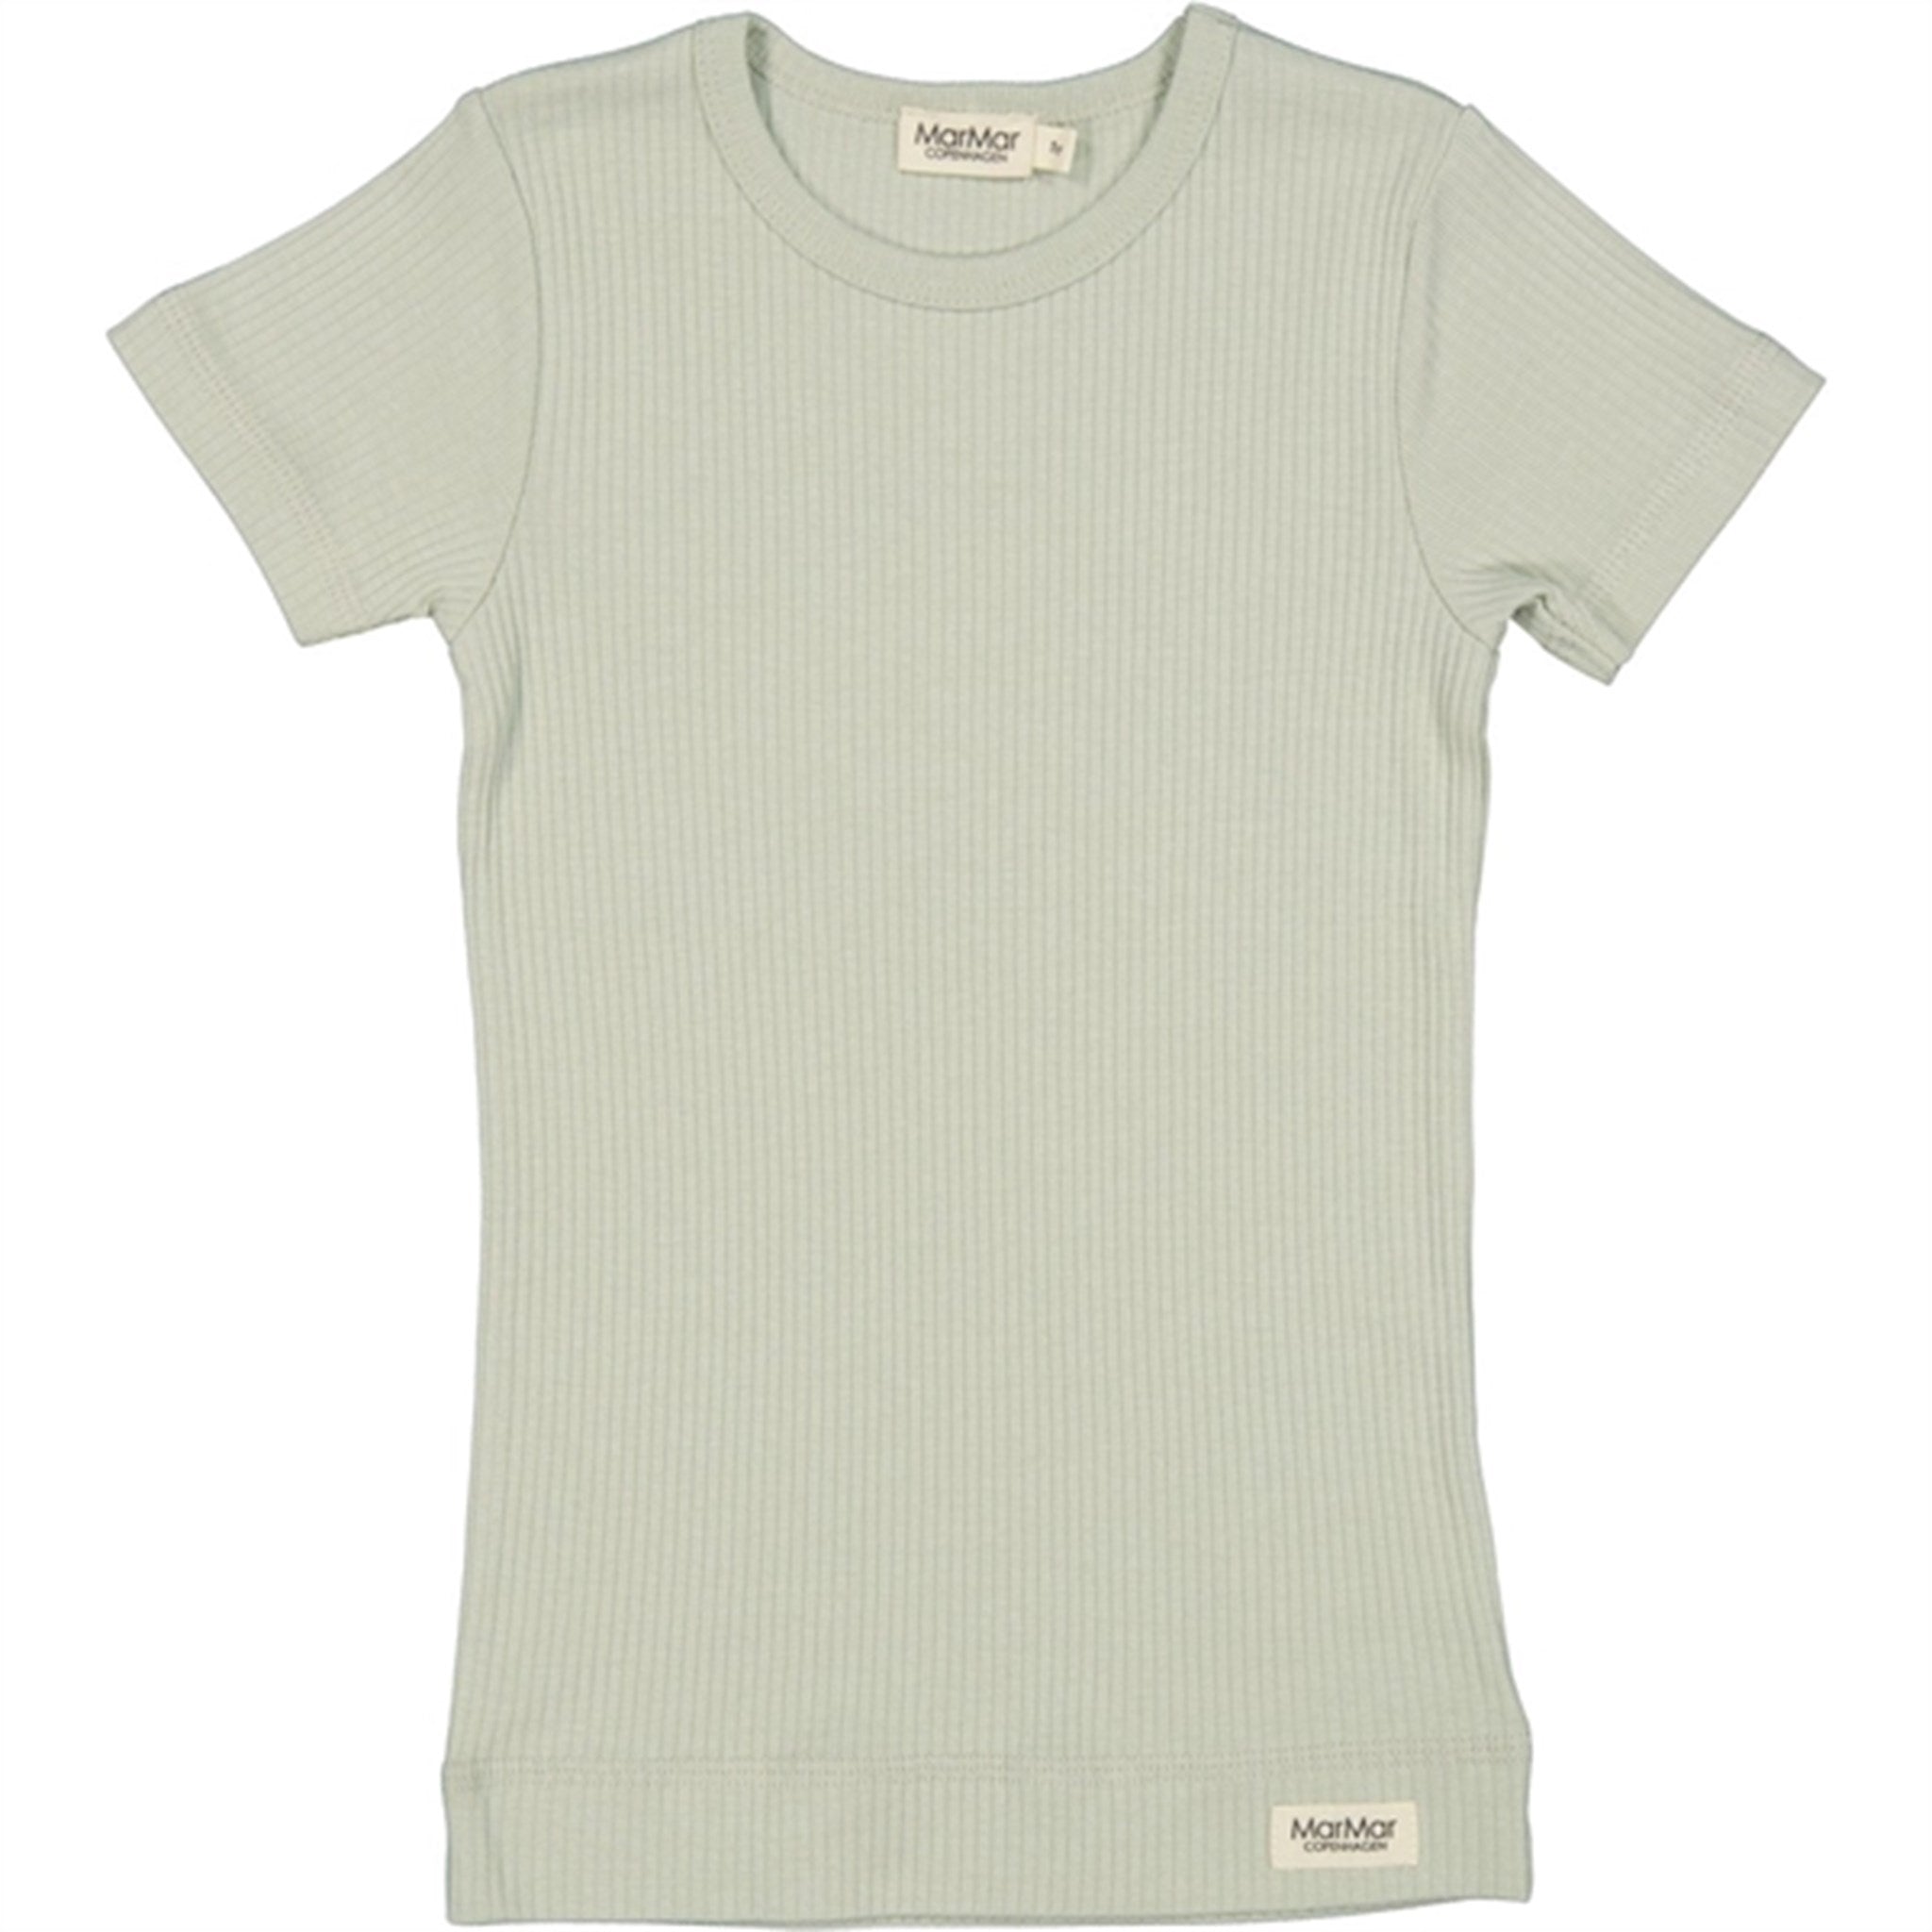 MarMar Modal White Sage T-shirt Plain